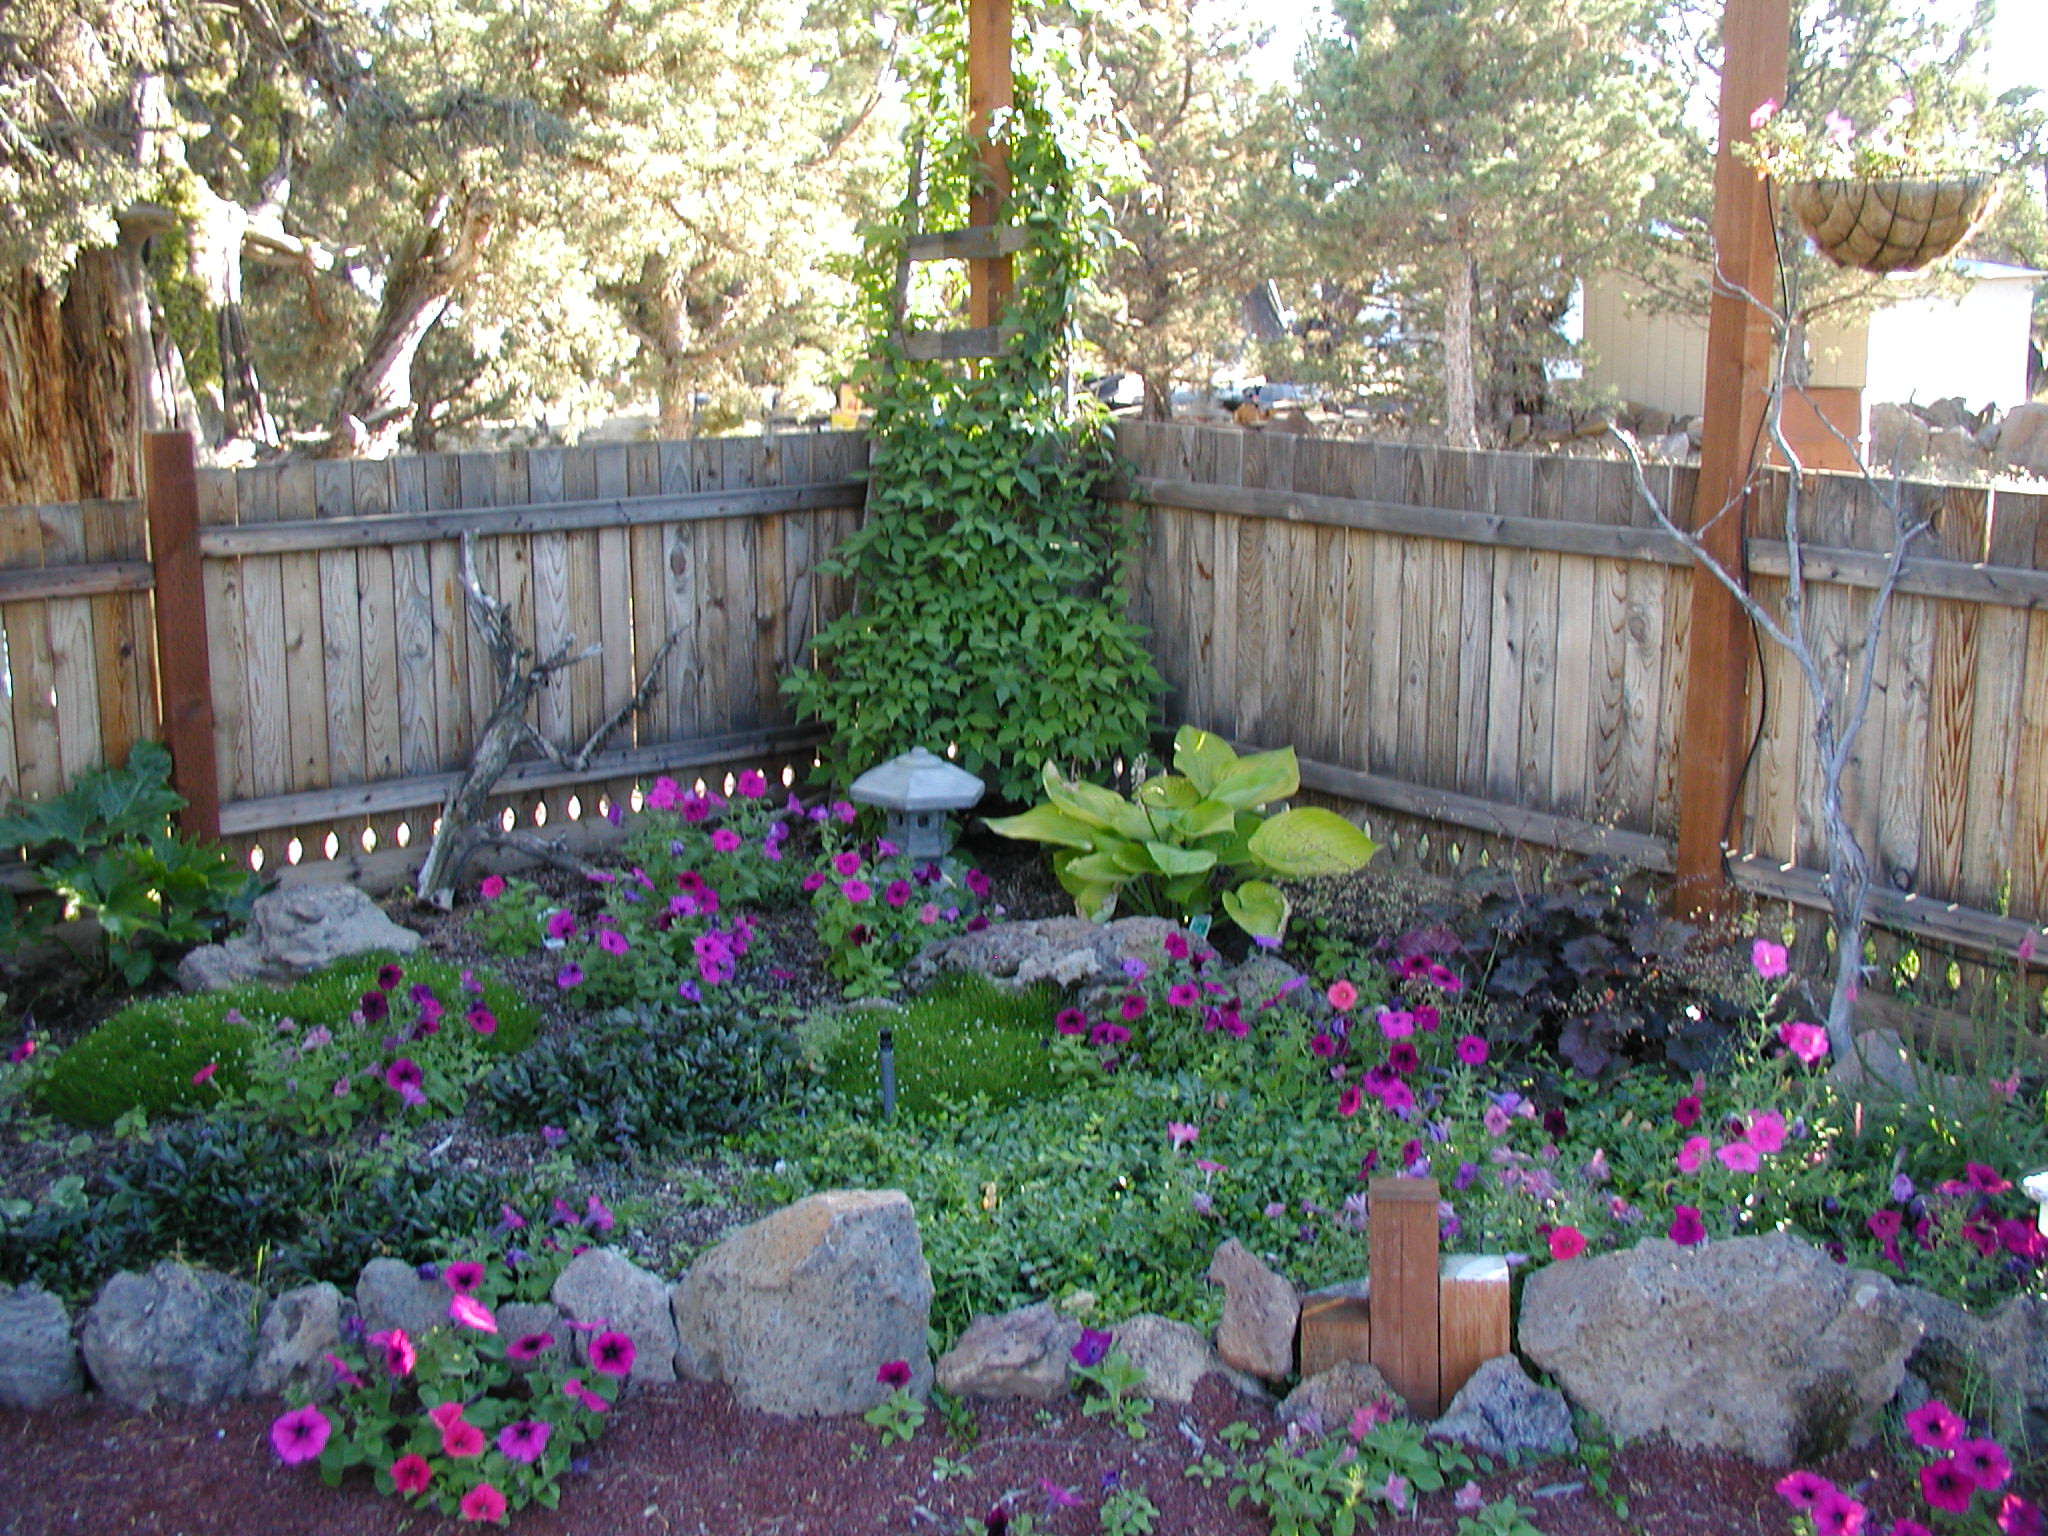 Best ideas about Corner Garden Ideas
. Save or Pin Uncategorized Now.